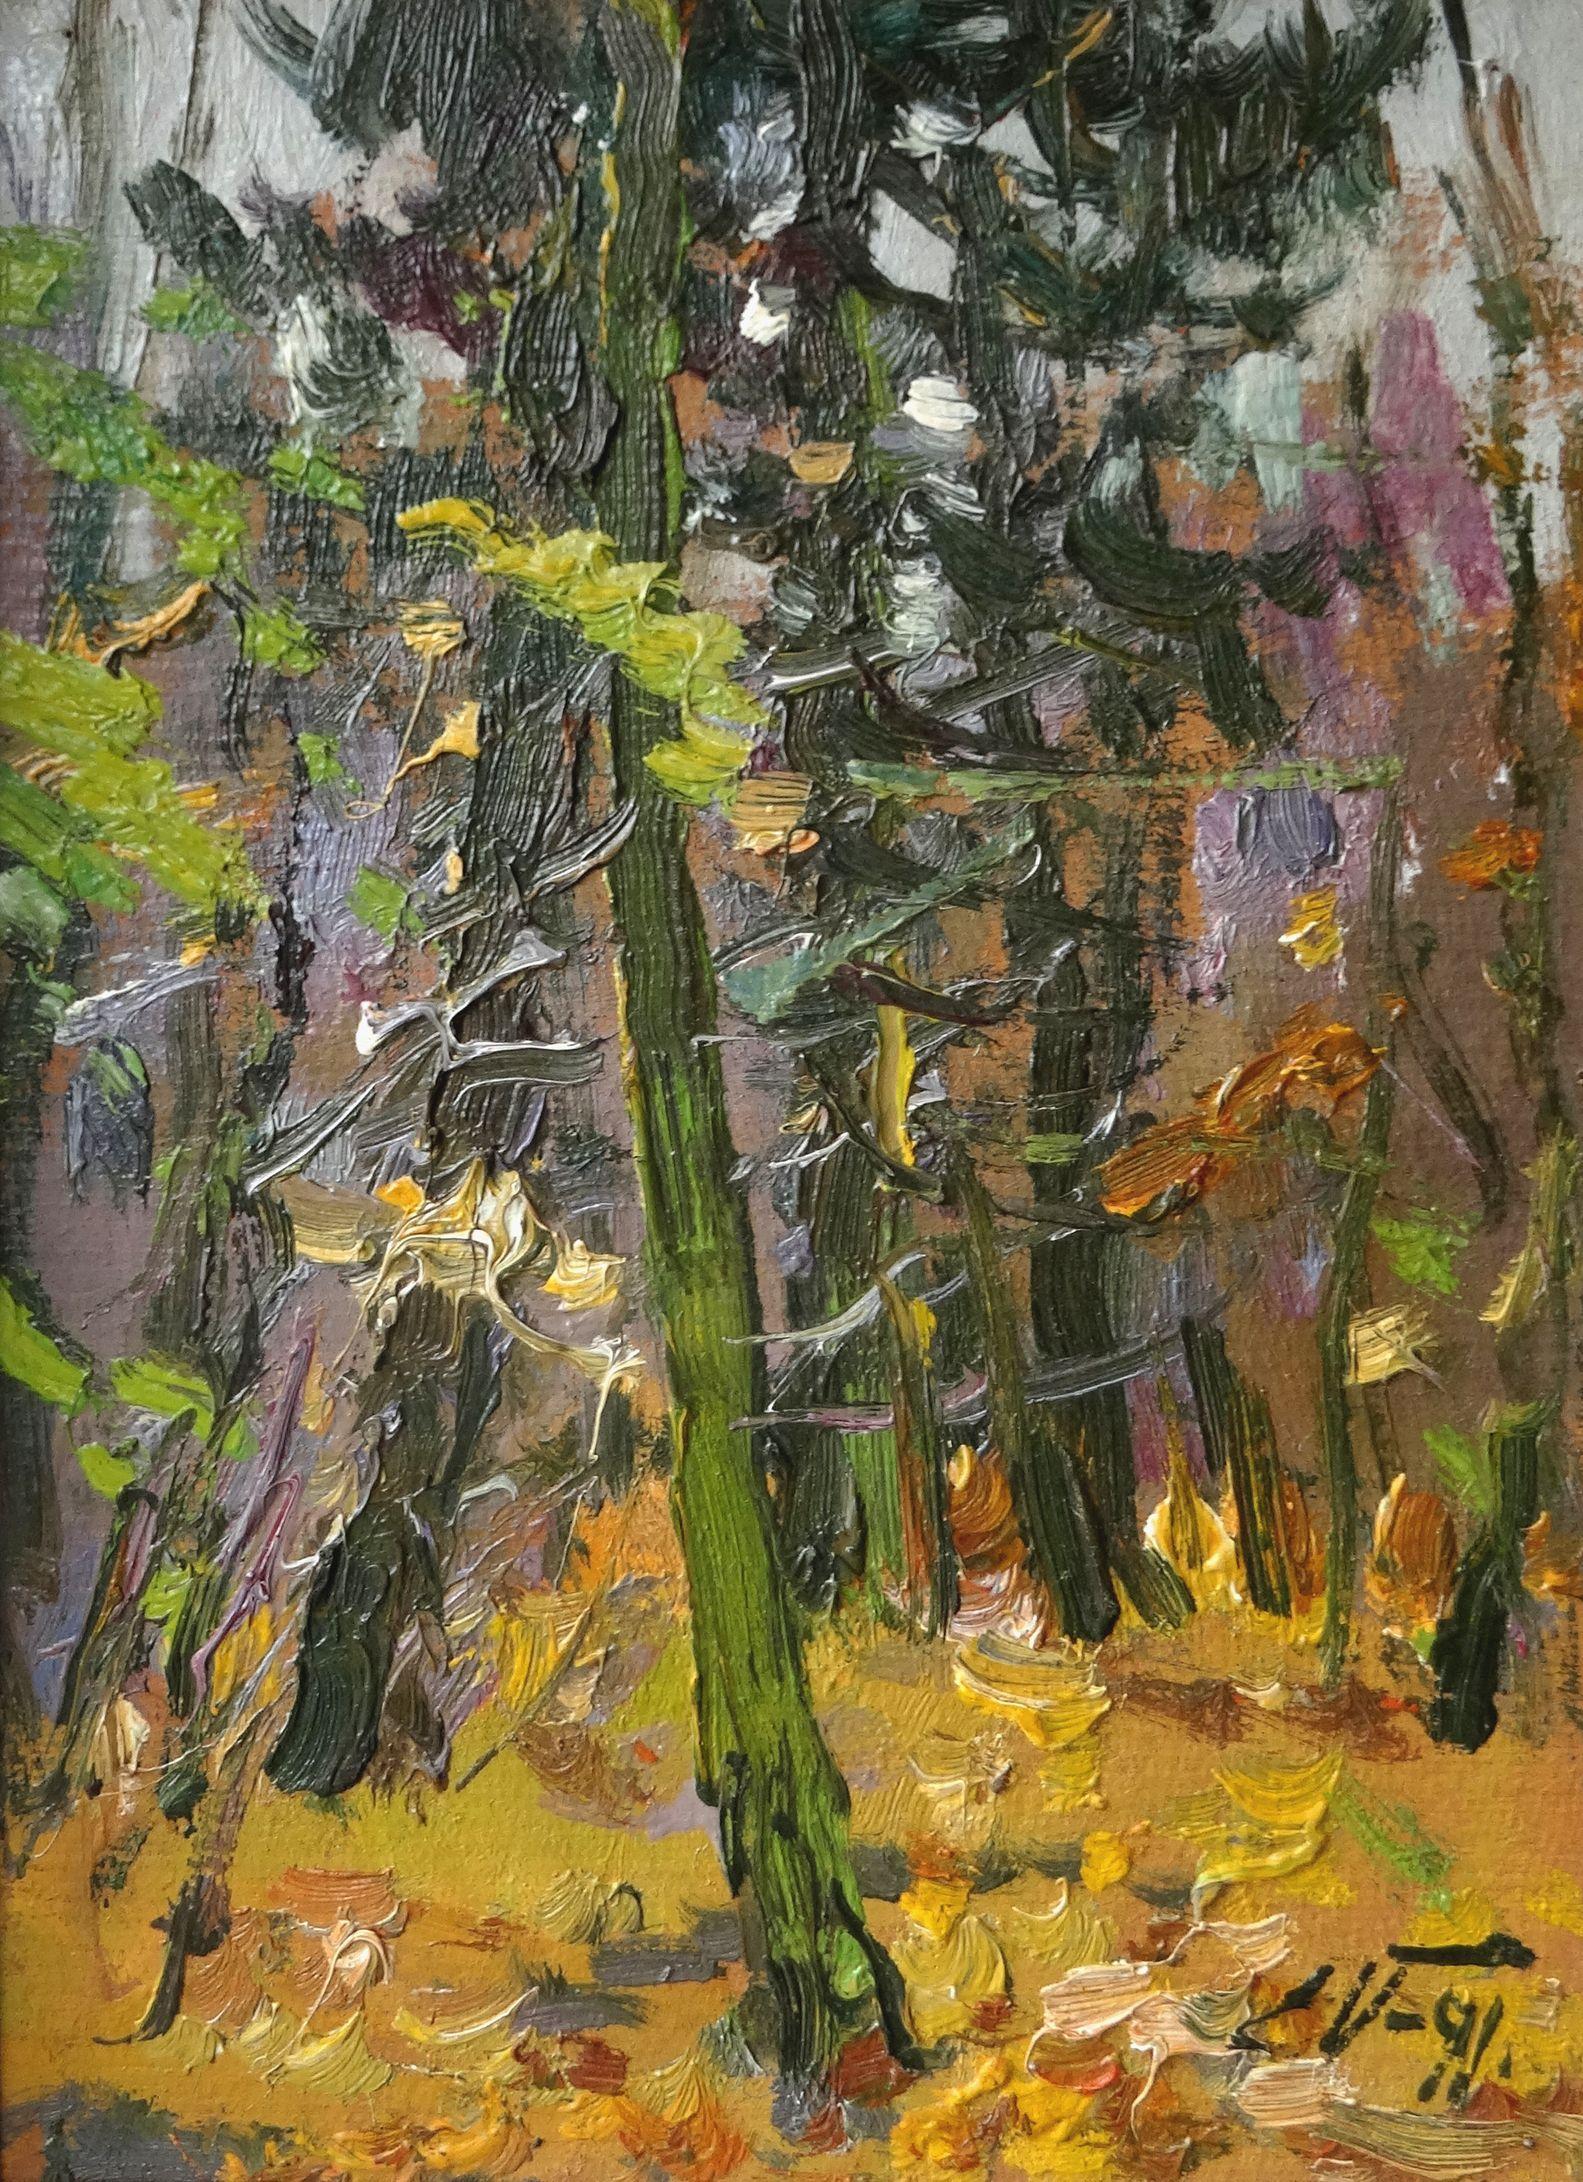 Edgars Vinters Landscape Art - In the forest. 1991. Oil on cardboard, 32x22 cm